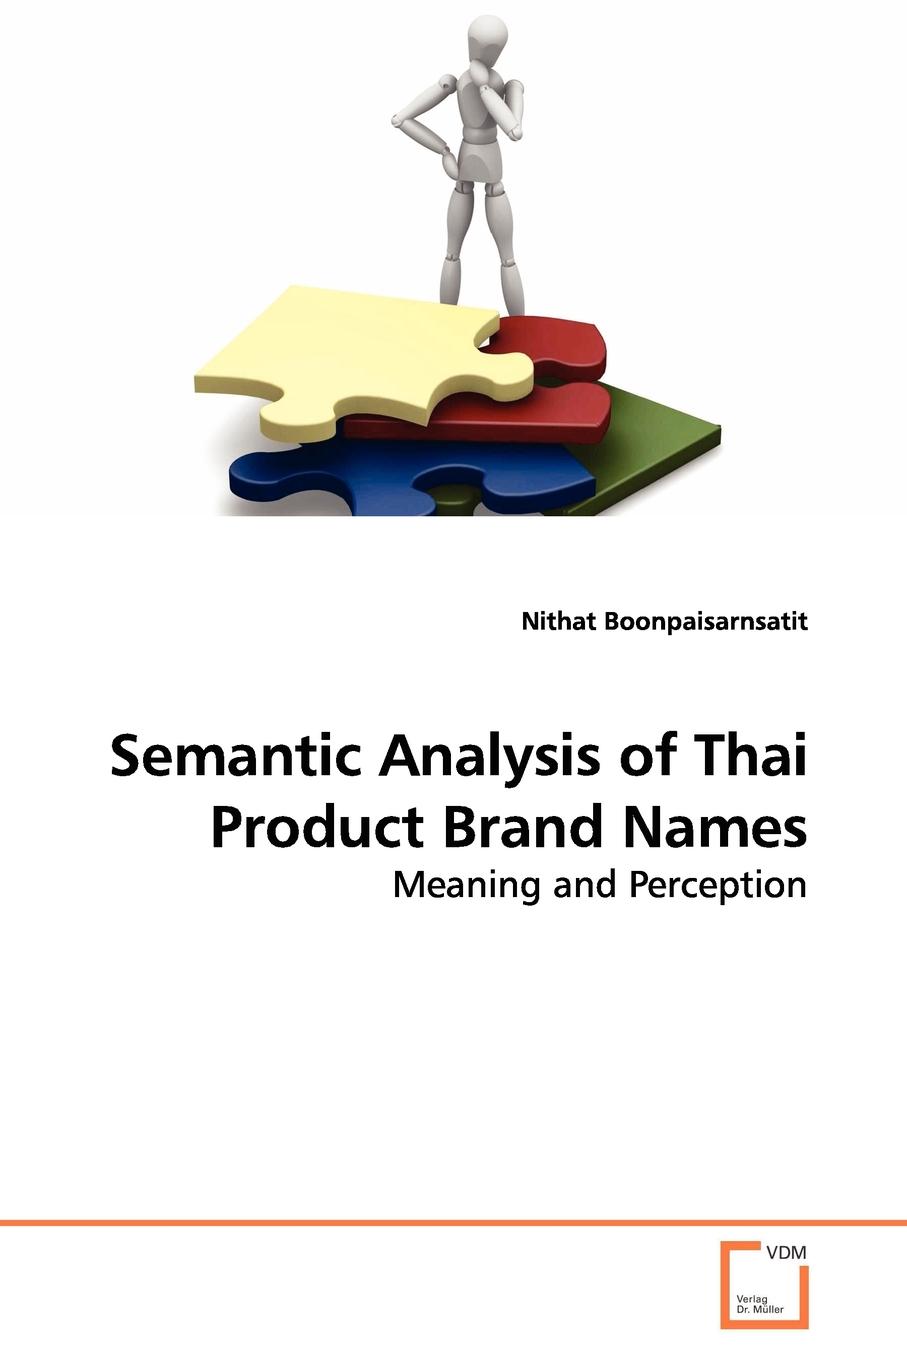 Nithat Boonpaisarnsatit Semantic Analysis of Thai Product Brand Names